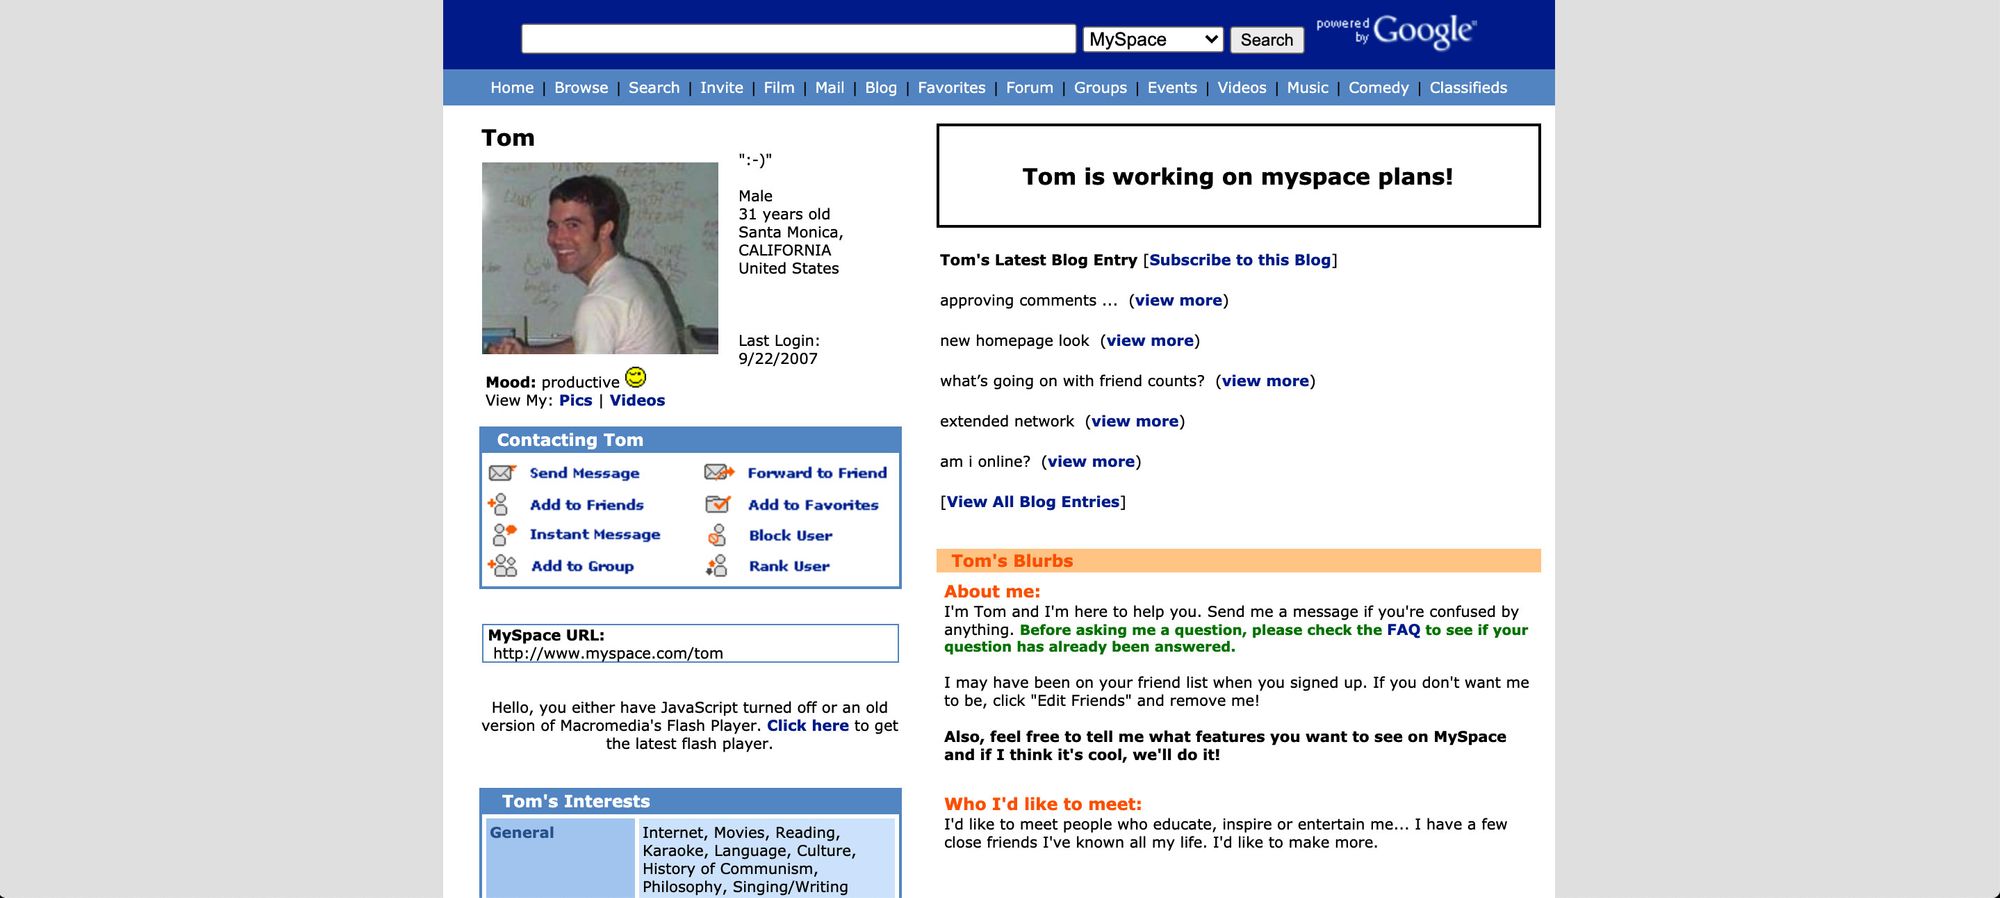 myspace-tom-profile